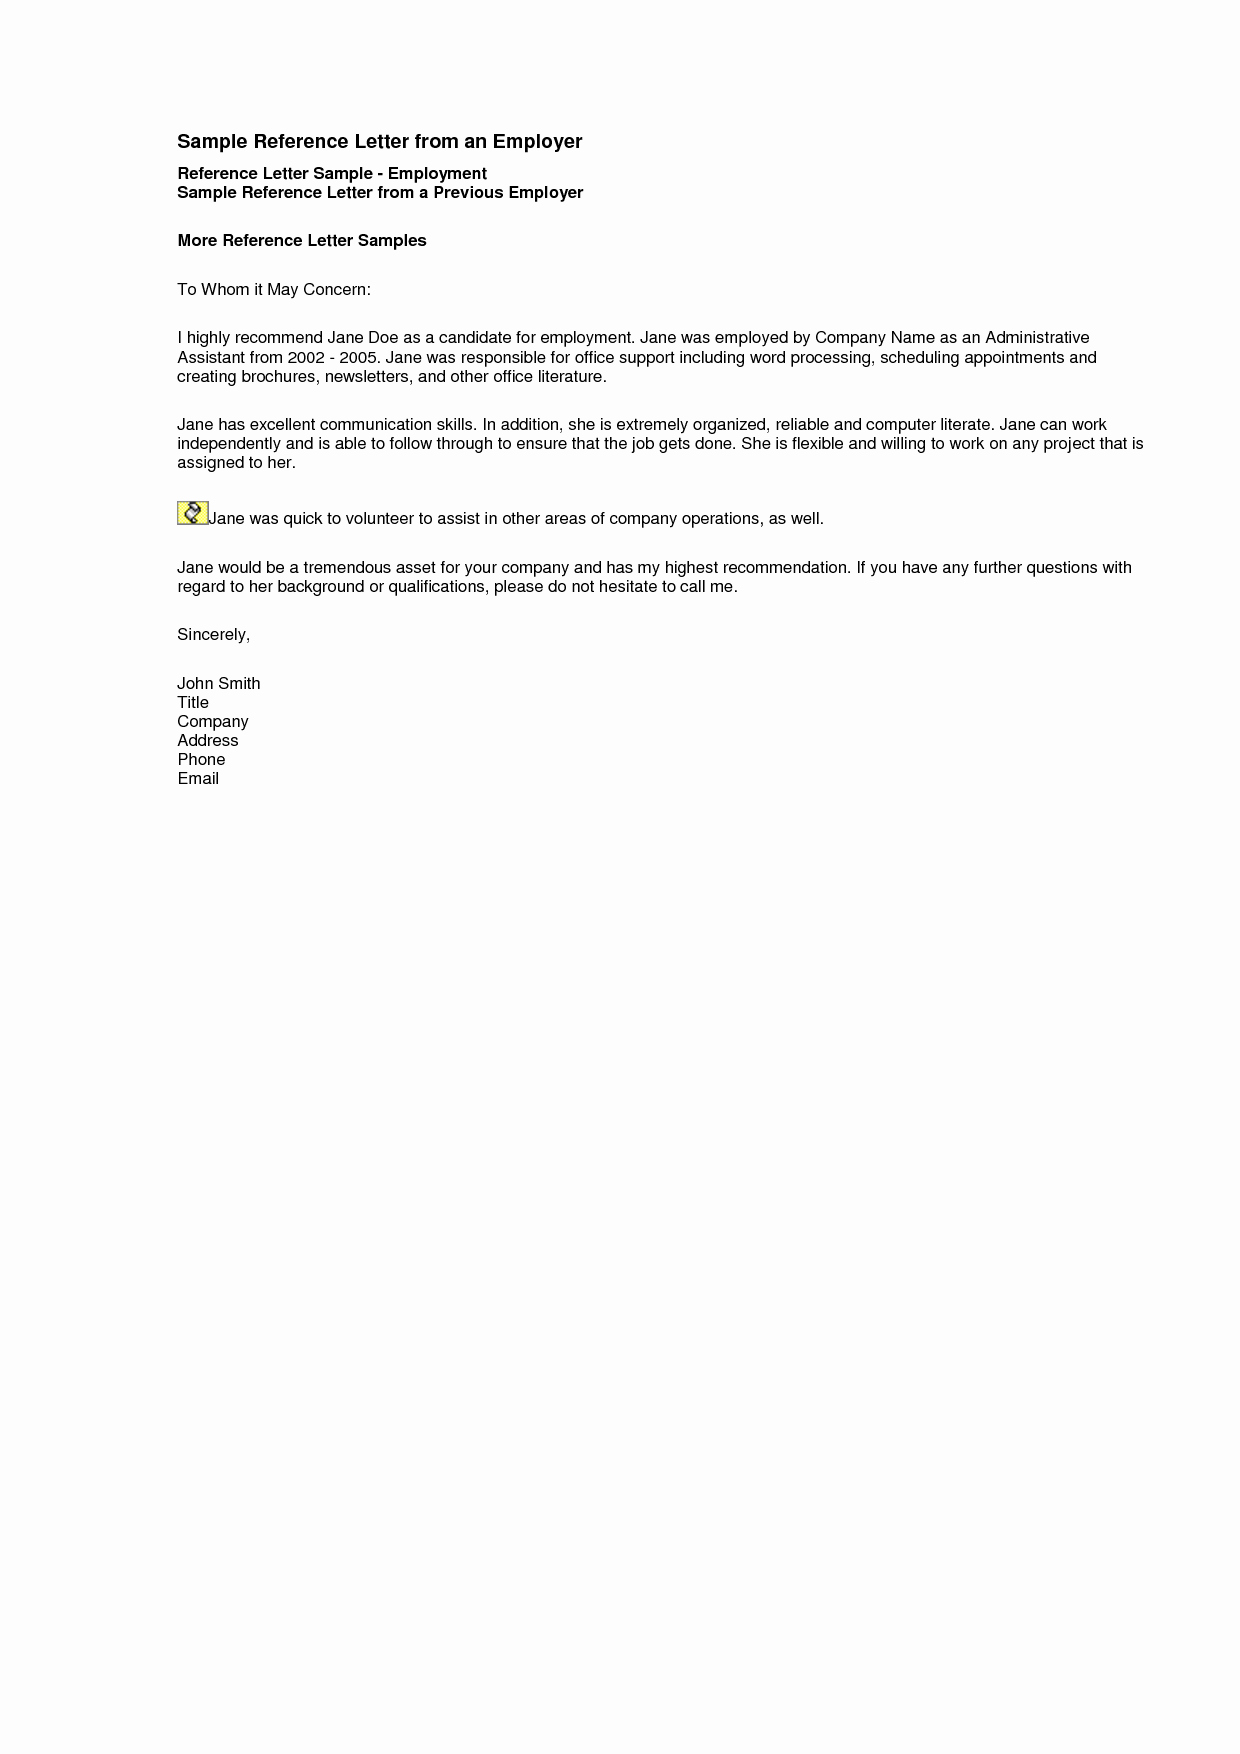 Recommendation Letter for Job Sample Elegant Sample Reference Letter for Employment